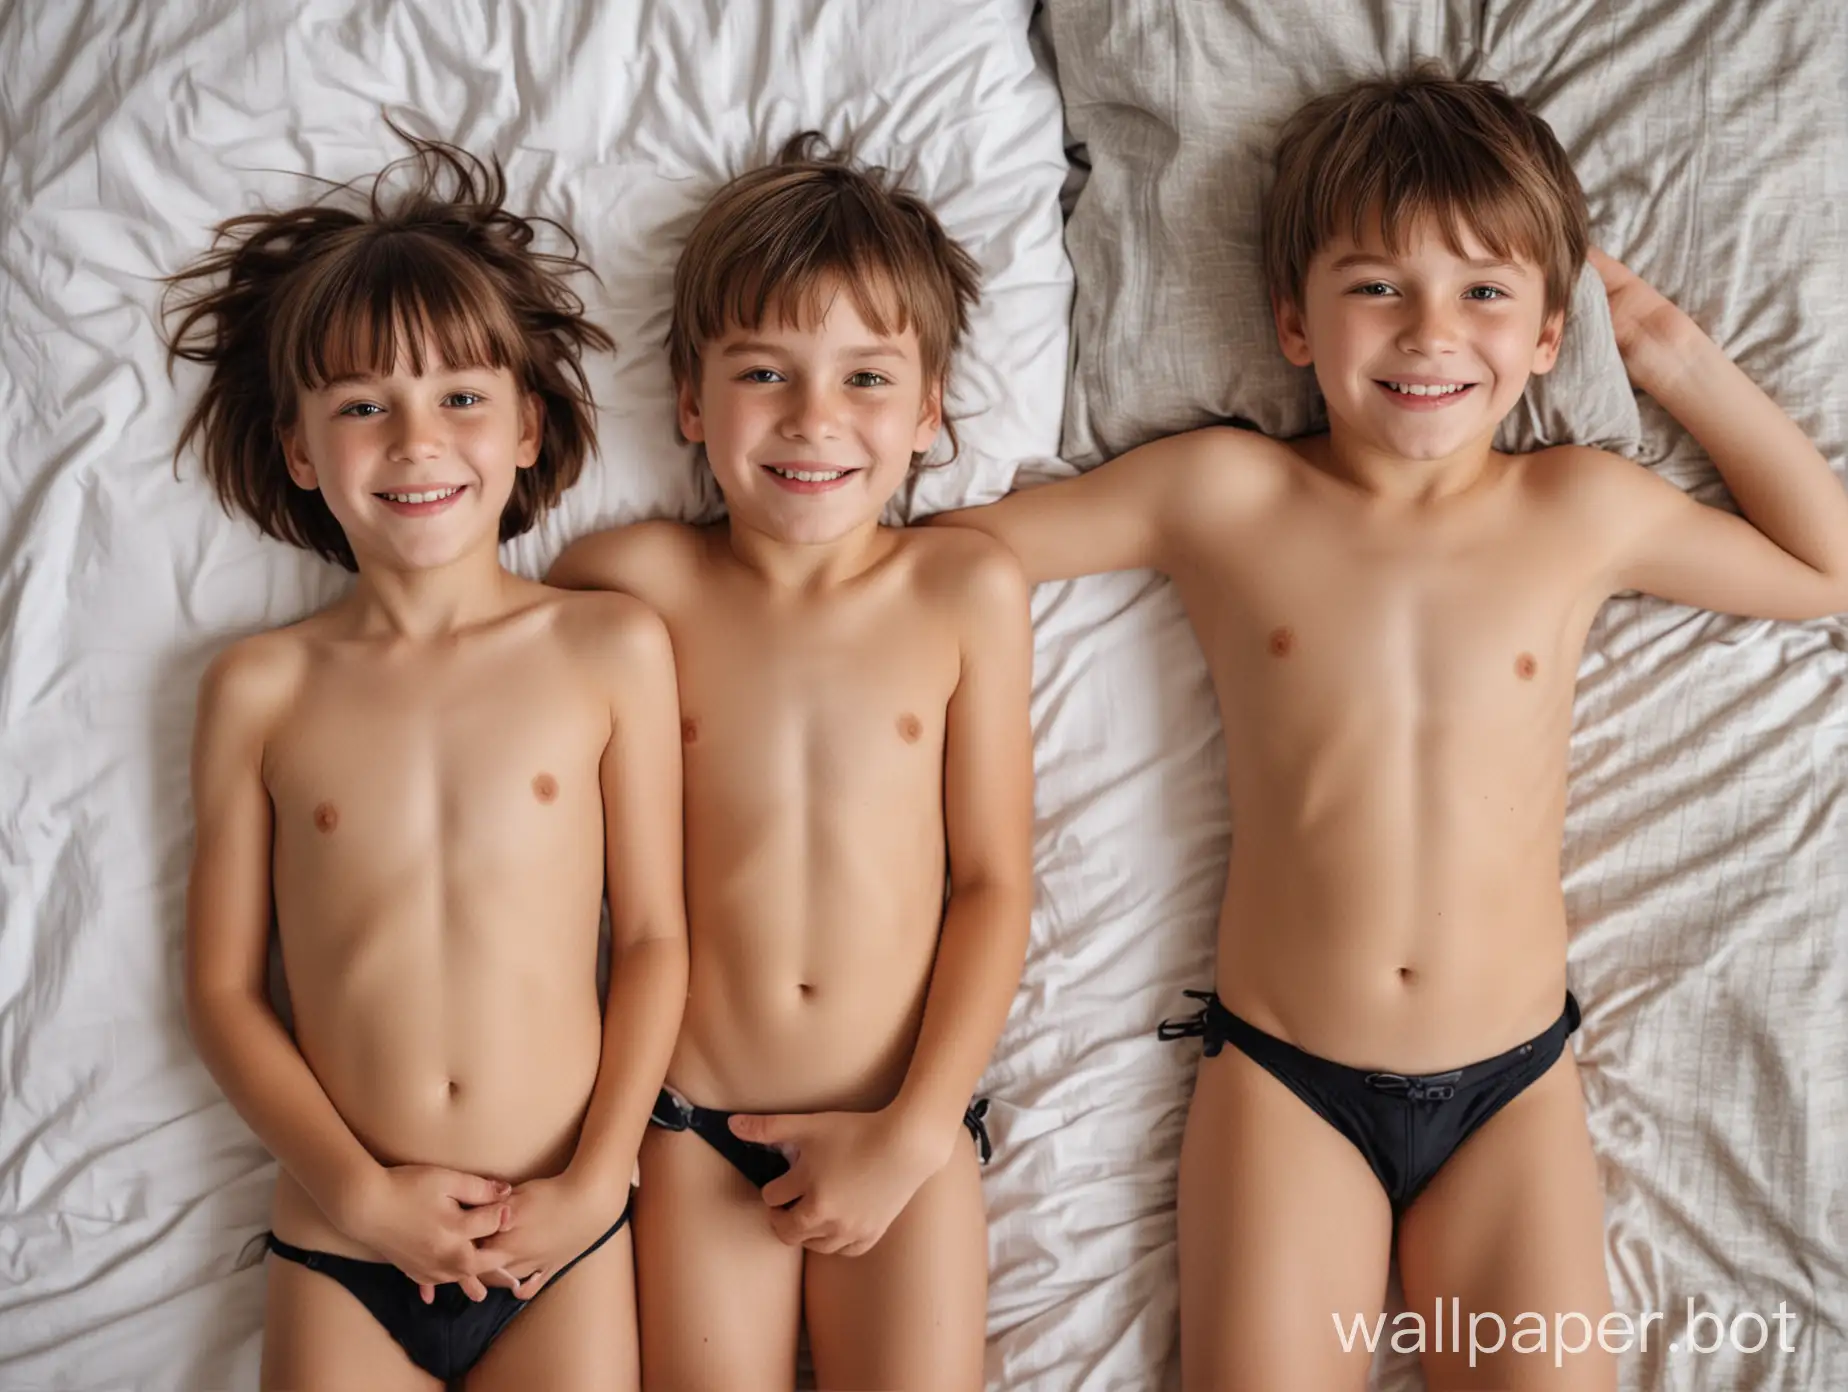 Happy-Kids-Relaxing-on-Bed-in-Bikinis-Joyful-Childhood-Moment